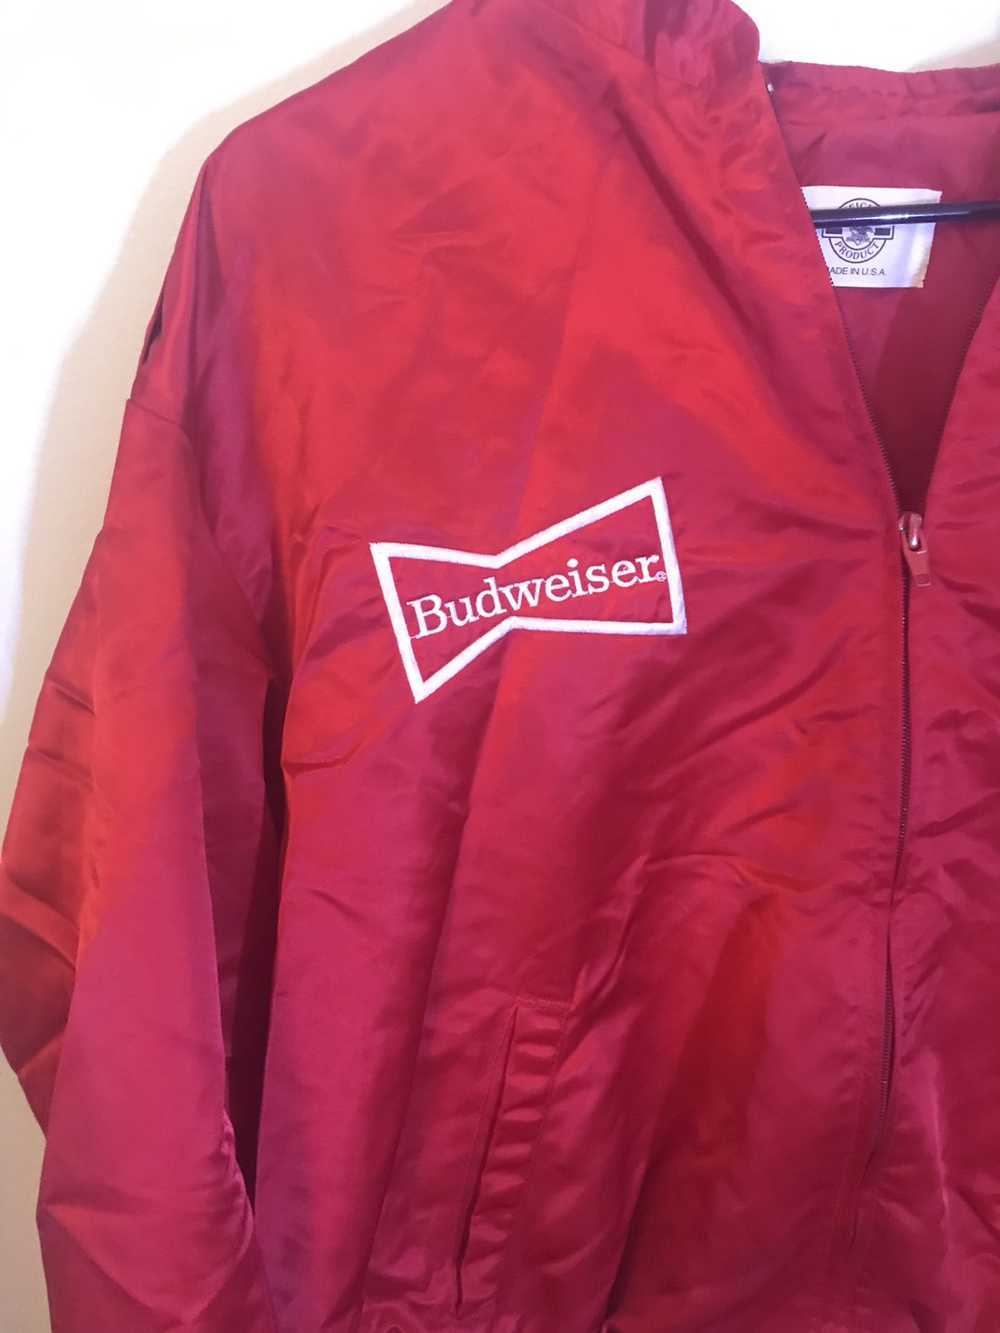 Budweiser Vintage Budweiser racing jacket - image 2